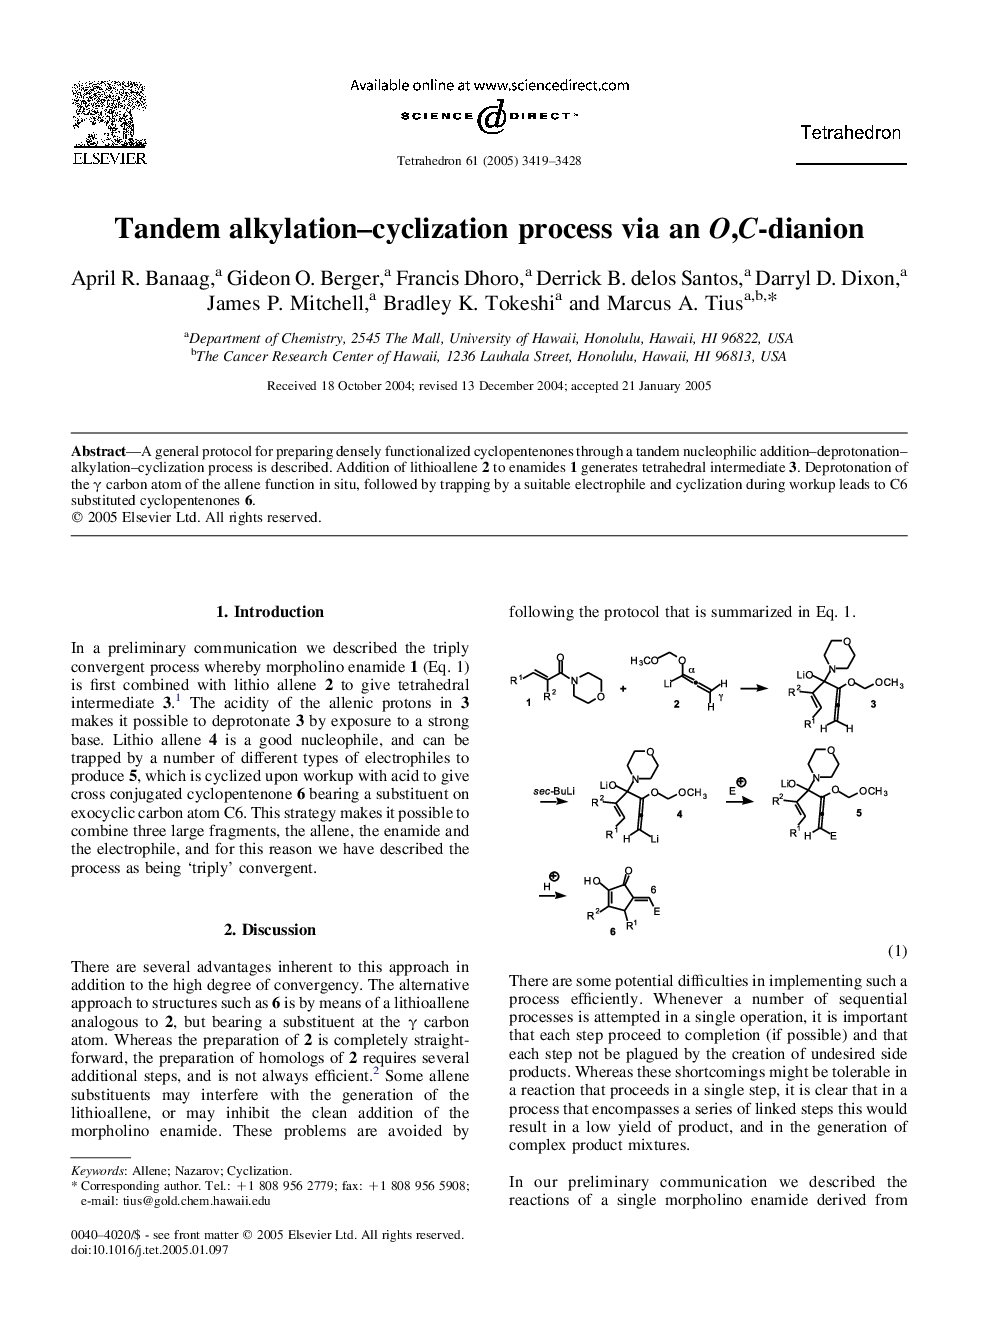 Tandem alkylation-cyclization process via an O,C-dianion